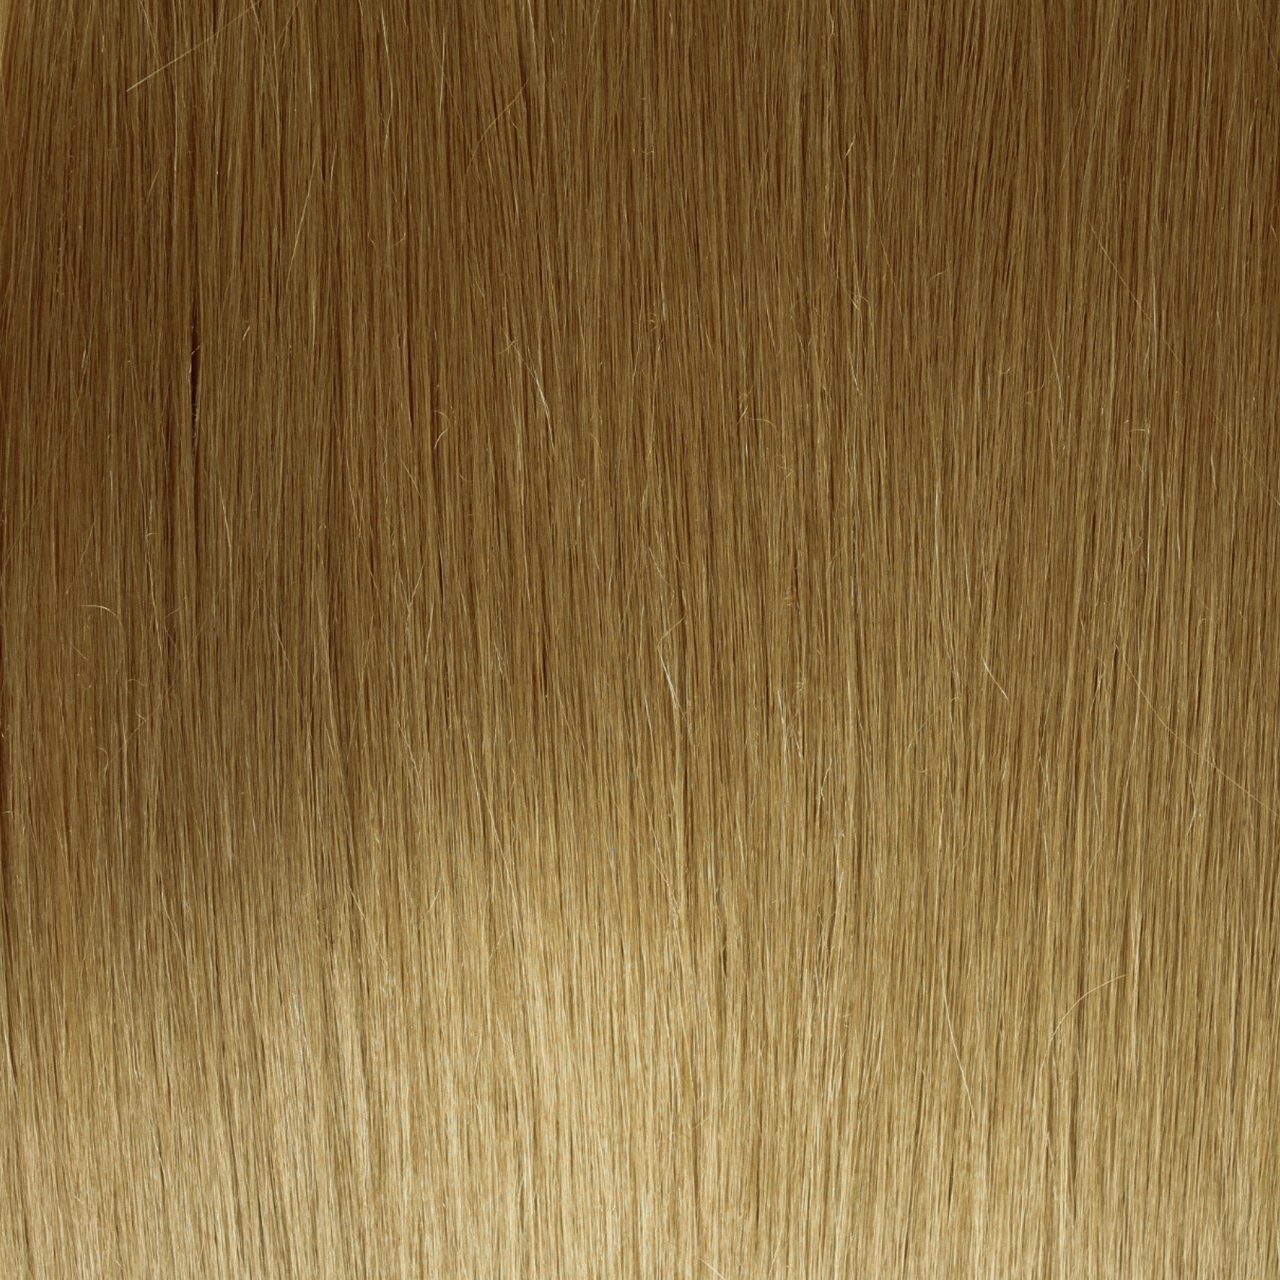 Haarknoten aus Kunsthaar-Extension S-10 Chignon Kunsthaar hair2heart